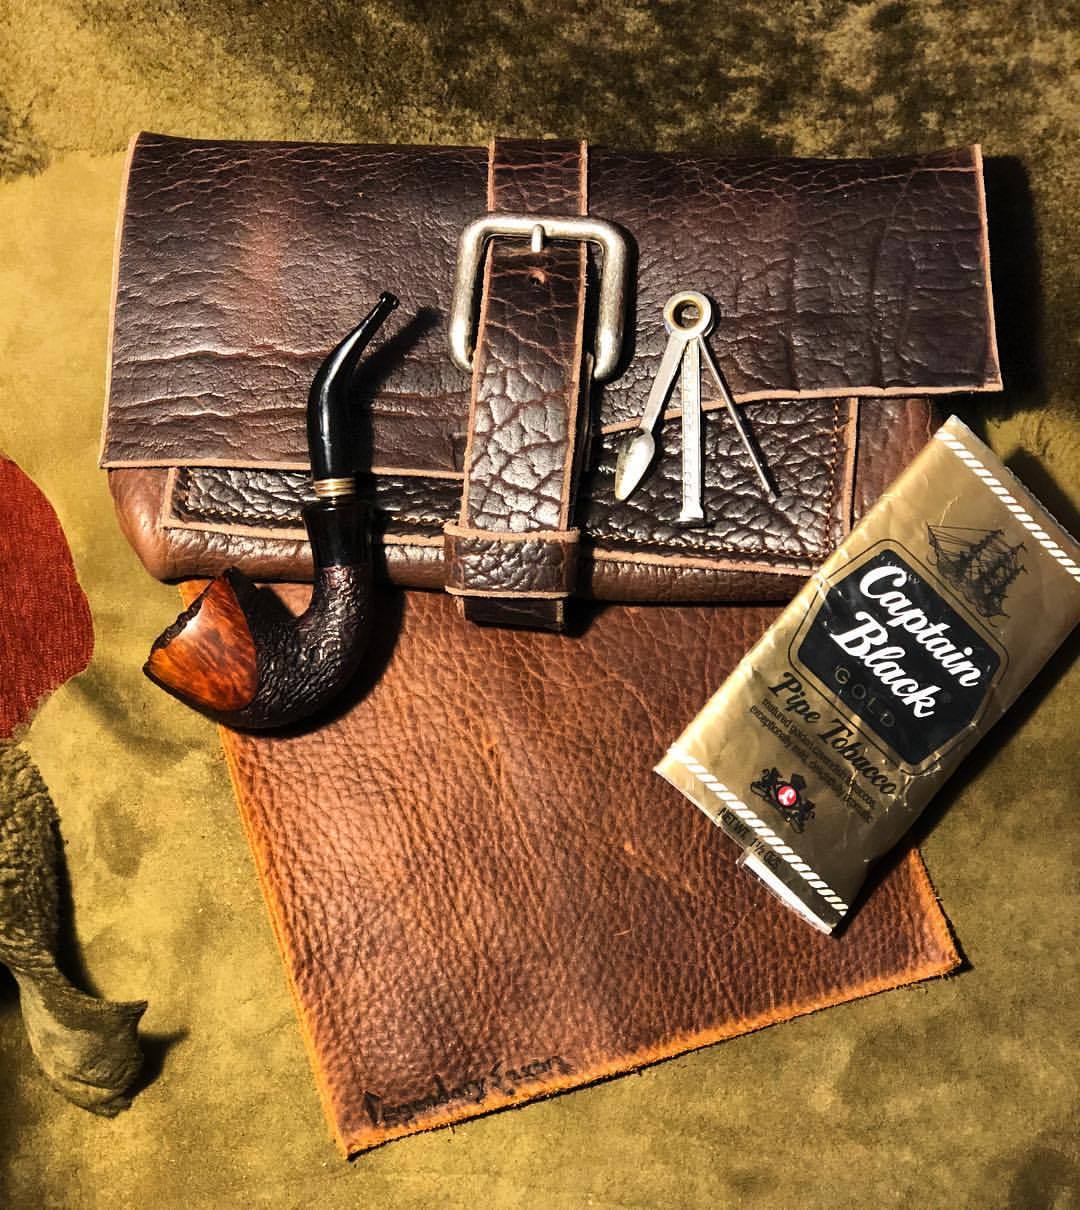 Custom Legendary Saxon 5X10 American bison leather tobacco pipe pouch 🔥💨 and tobacco mat. #madeinusa #veteranmade ⚔️⚒ #ruggedluxury #legendarysaxon #tobaccopipe #pipesmoking #pipetobacco #ytpc www.LegendarySaxon.com